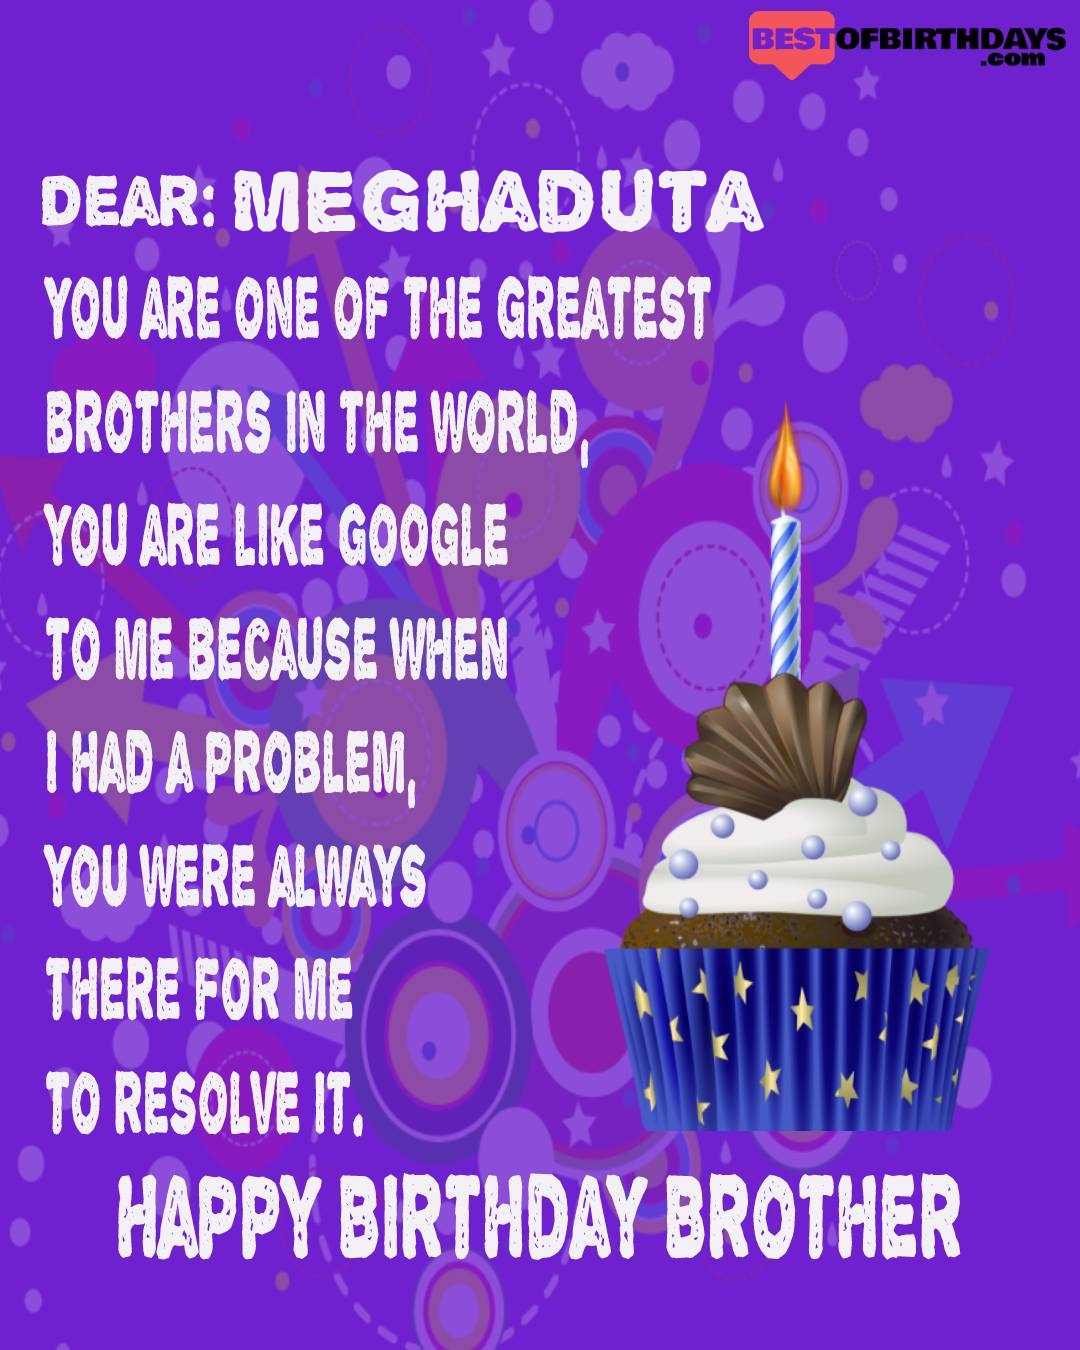 Happy birthday meghaduta bhai brother bro